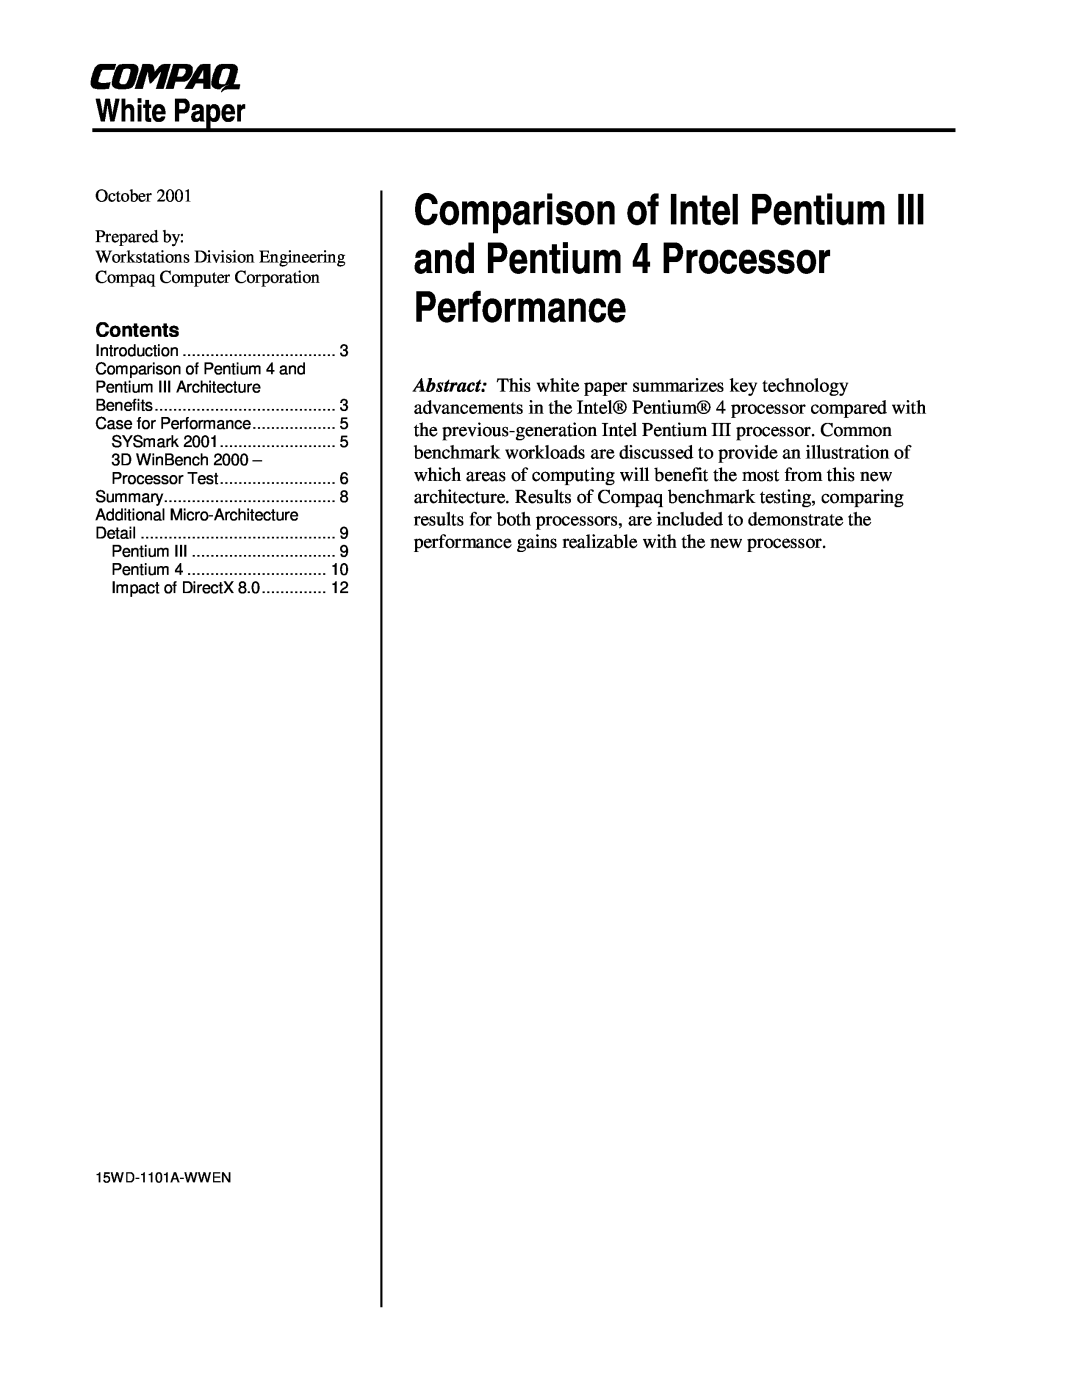 HP EN P600, EN P667/820 manual White Paper, Comparison of Intel Pentium and Pentium 4 Processor Performance, Contents 